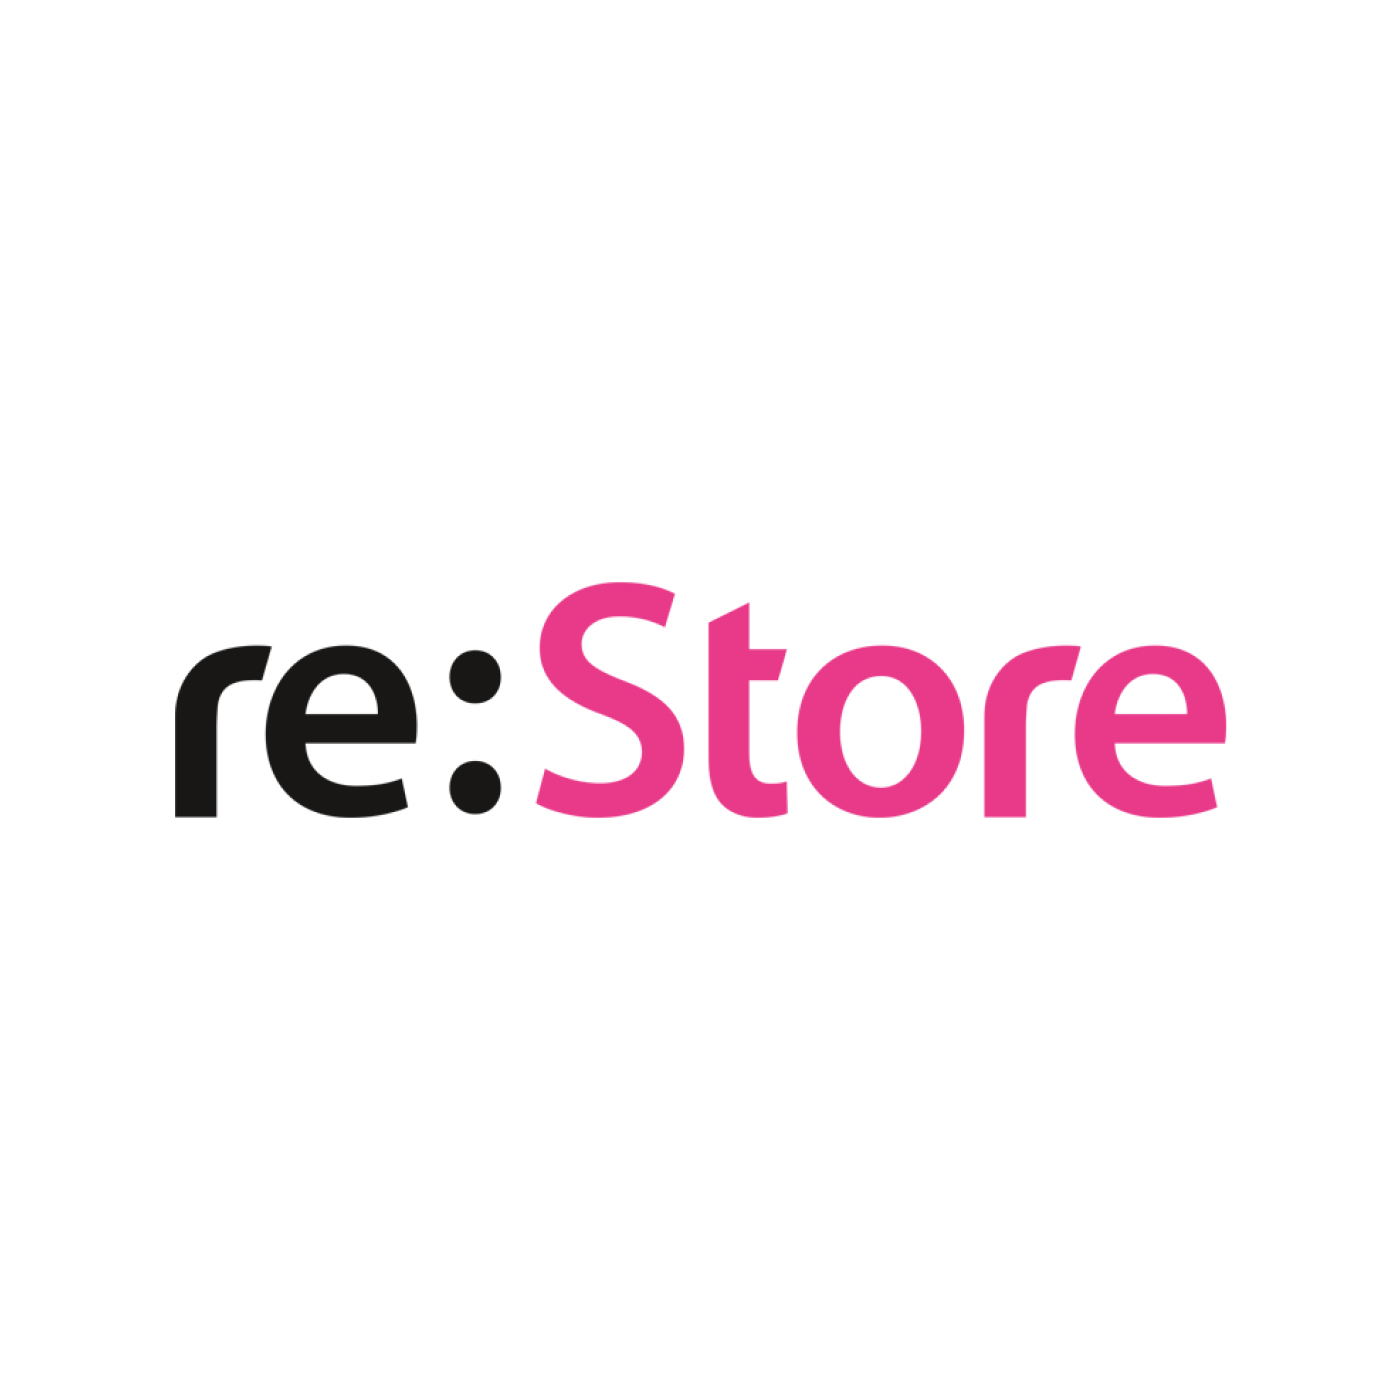 Restore эмблема. Re Store. Ресторе логотип. Rem Store. Euromastershop ru